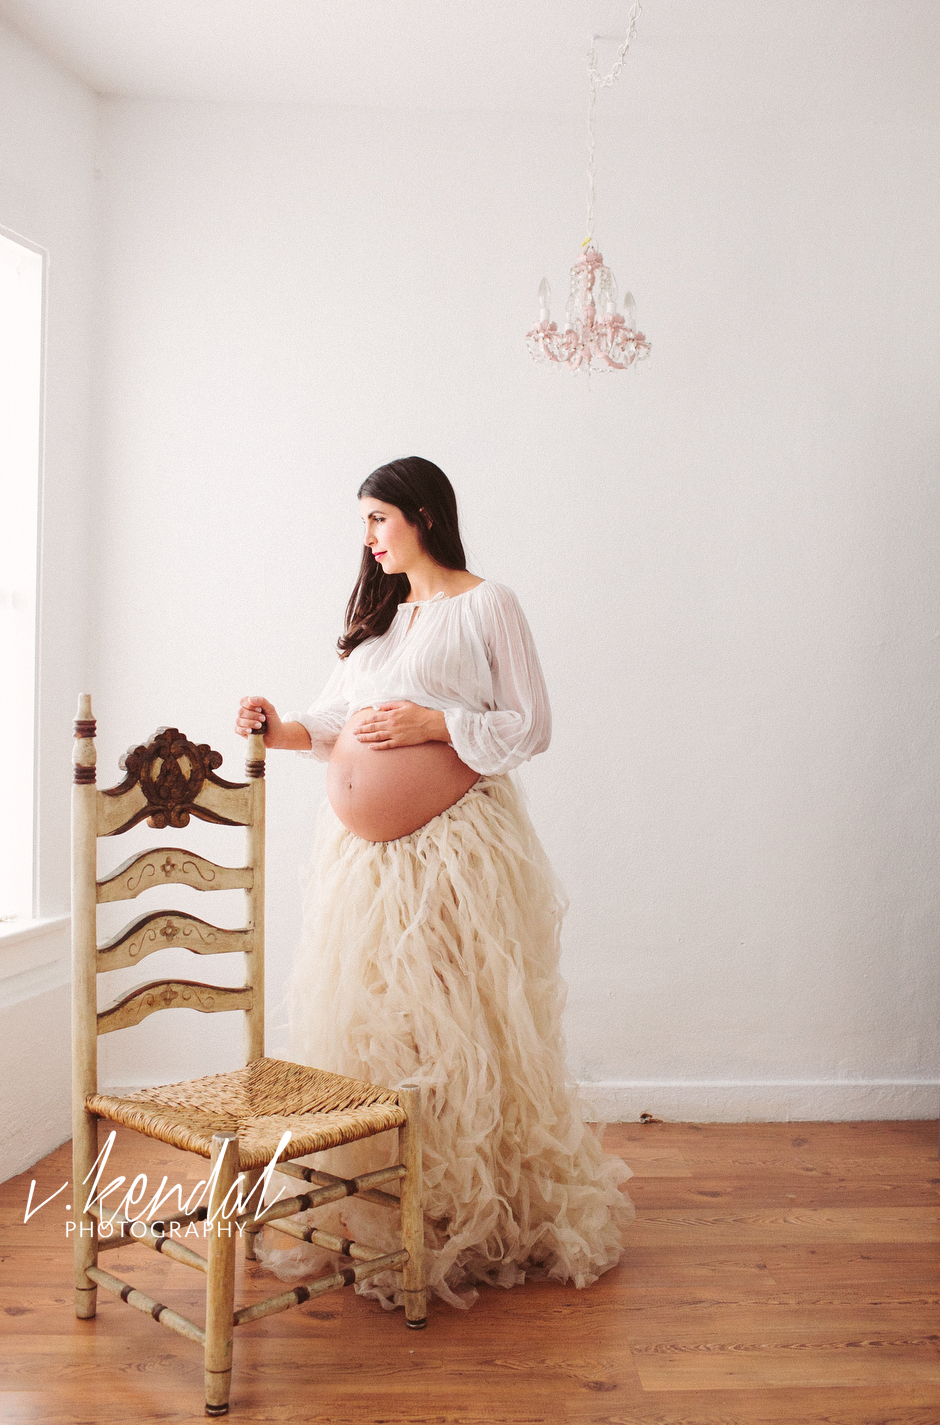 Anoushka - Blog-Los-Angeles-Studio-Maternity-Photos-V-Kendal-Photography215.JPG